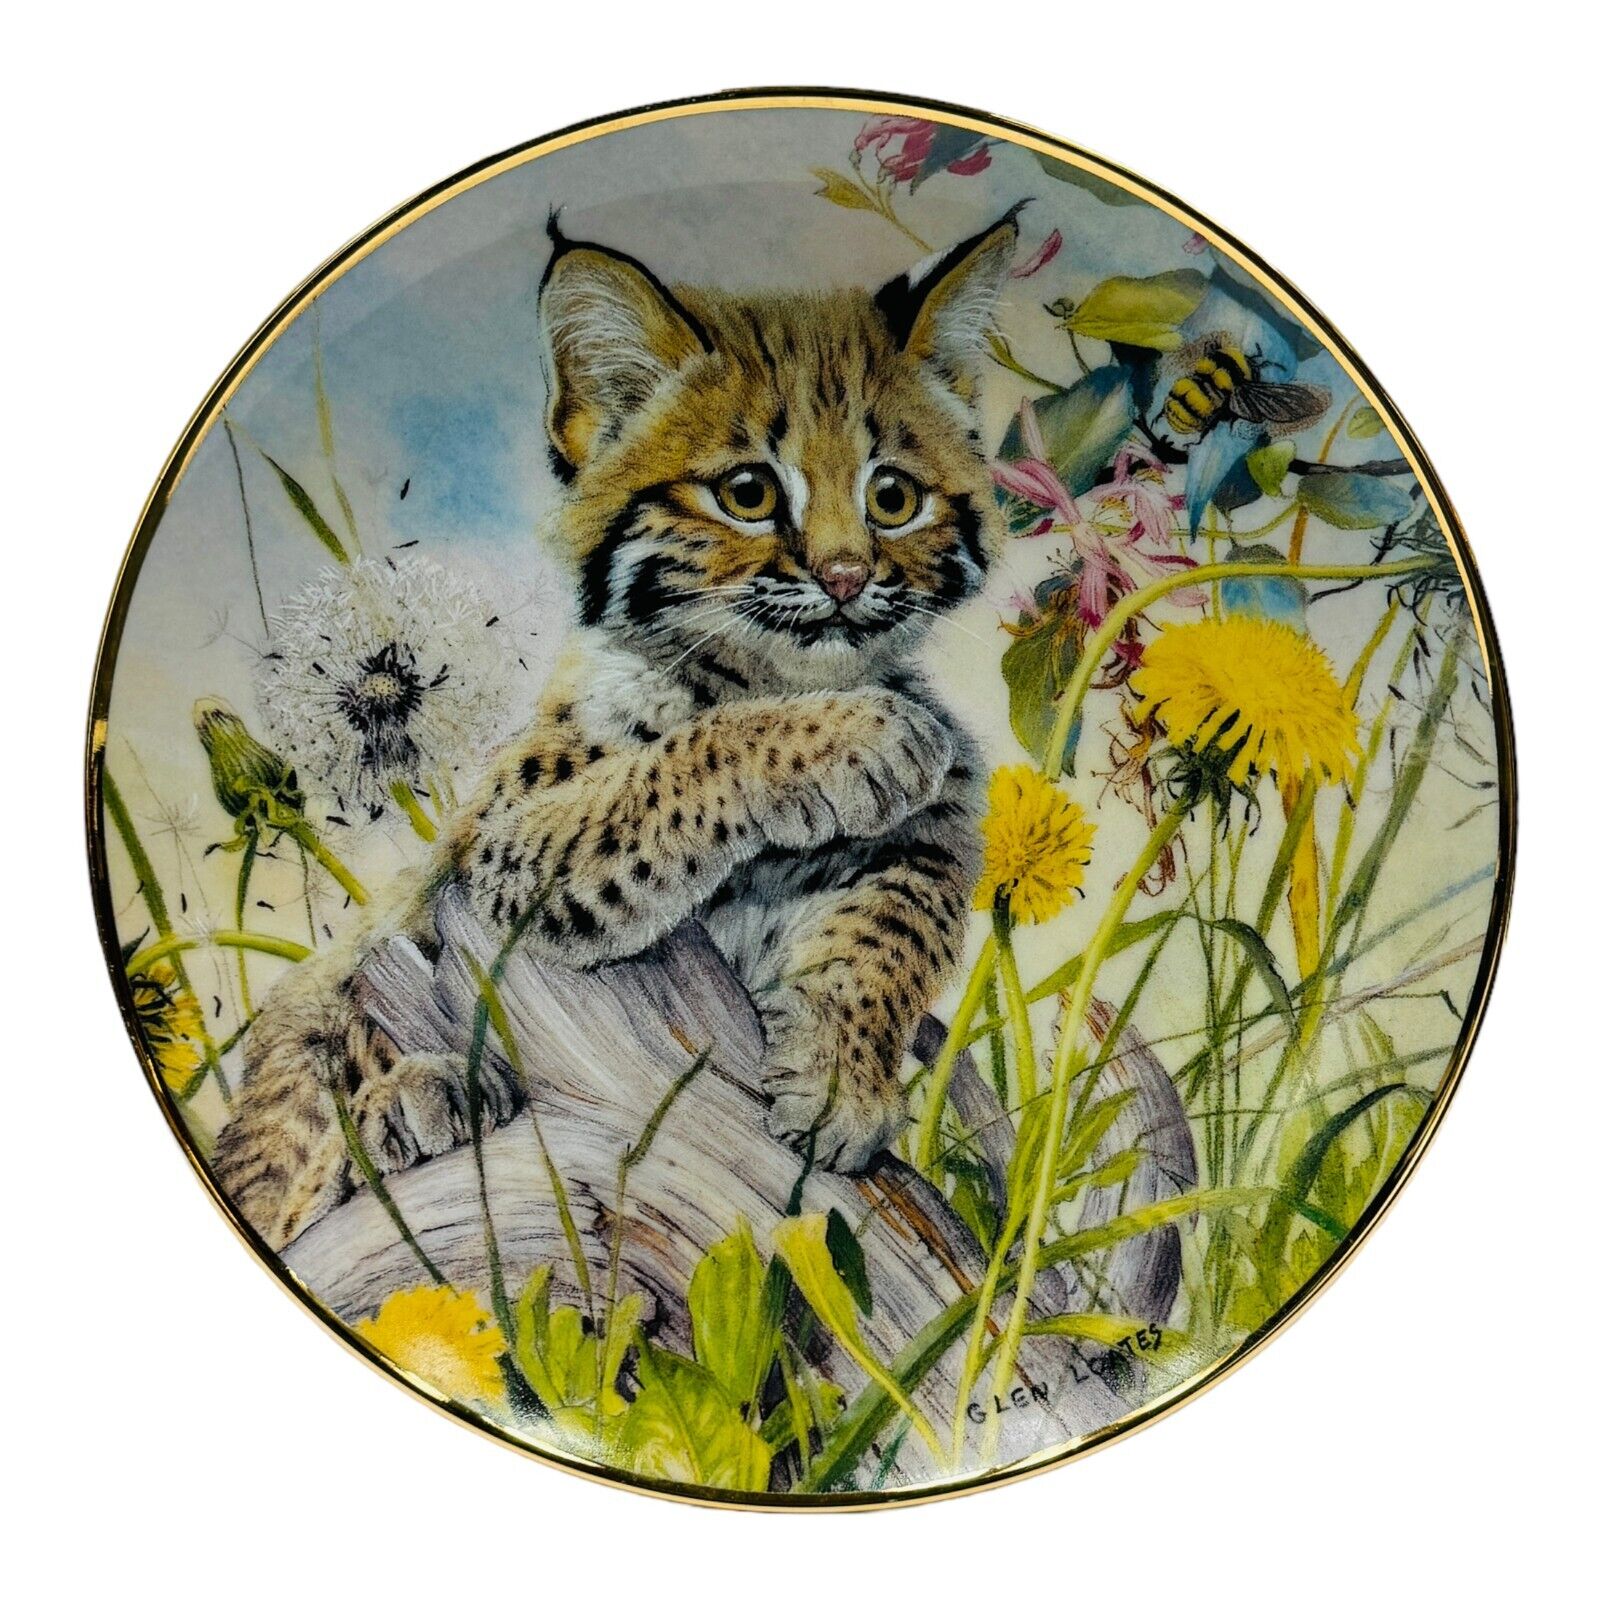 Franklin Mint Plate No F4198 Limited Ed “Lets Bee Friends” by Glen Loates